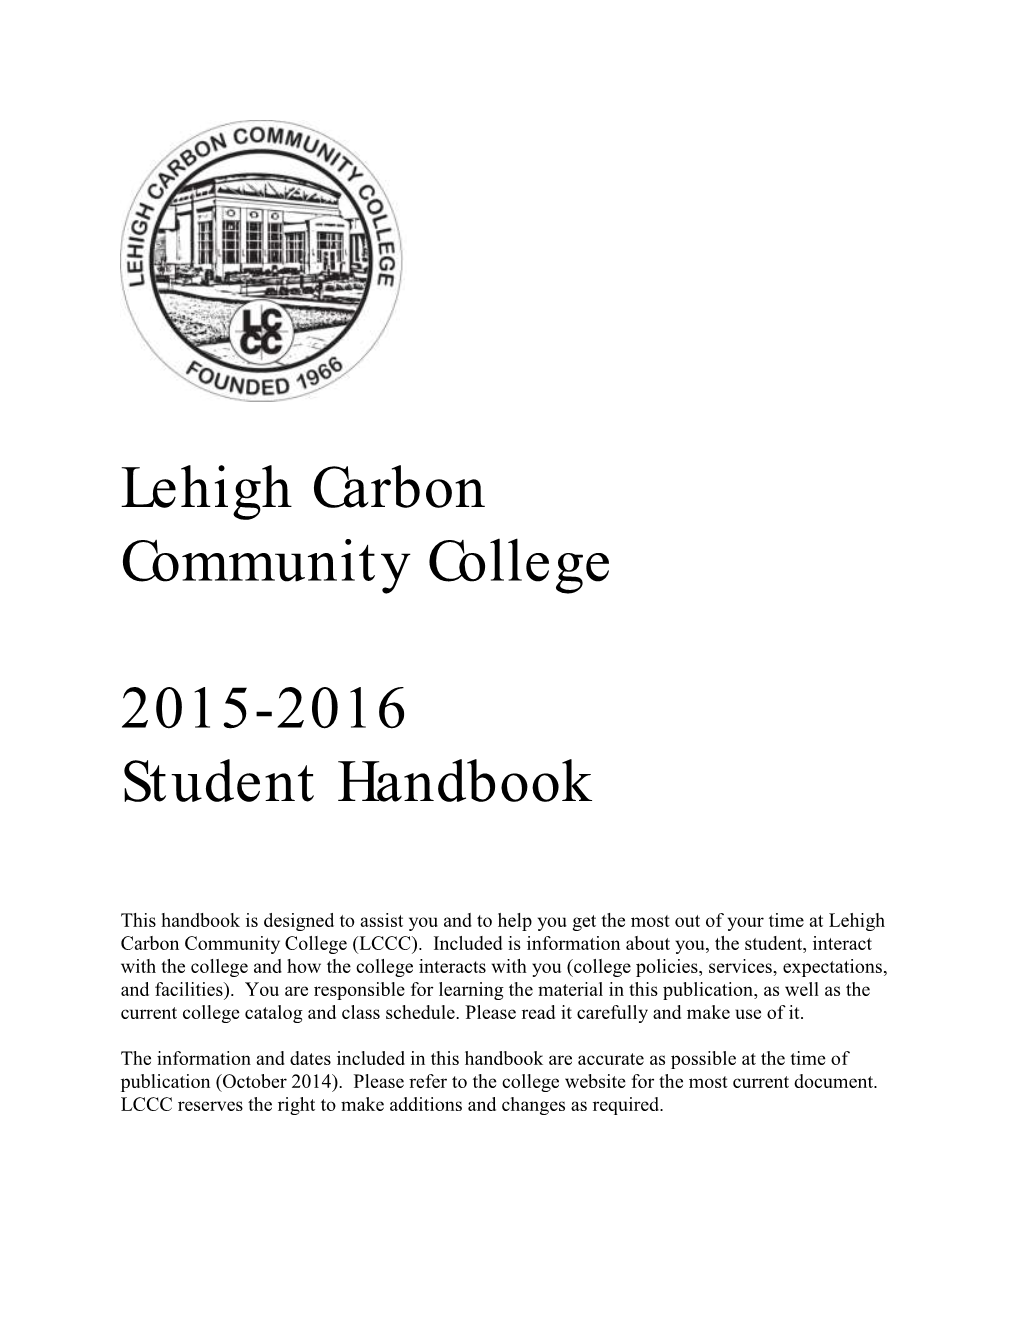 Lehigh Carbon Community College 2015-2016 Student Handbook